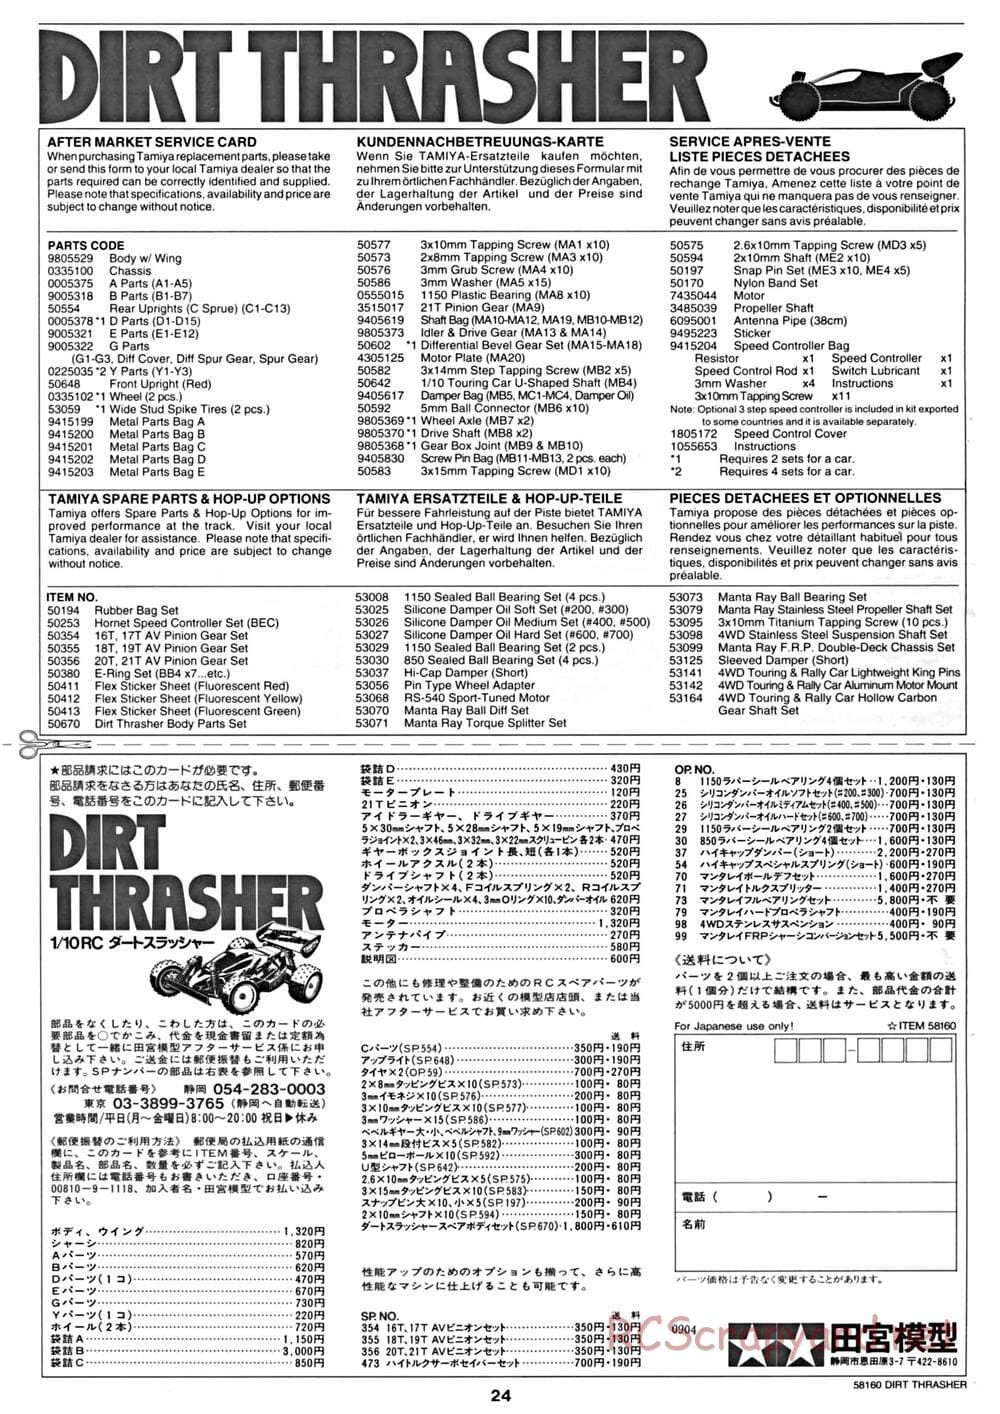 Tamiya - Dirt Thrasher Chassis - Manual - Page 24